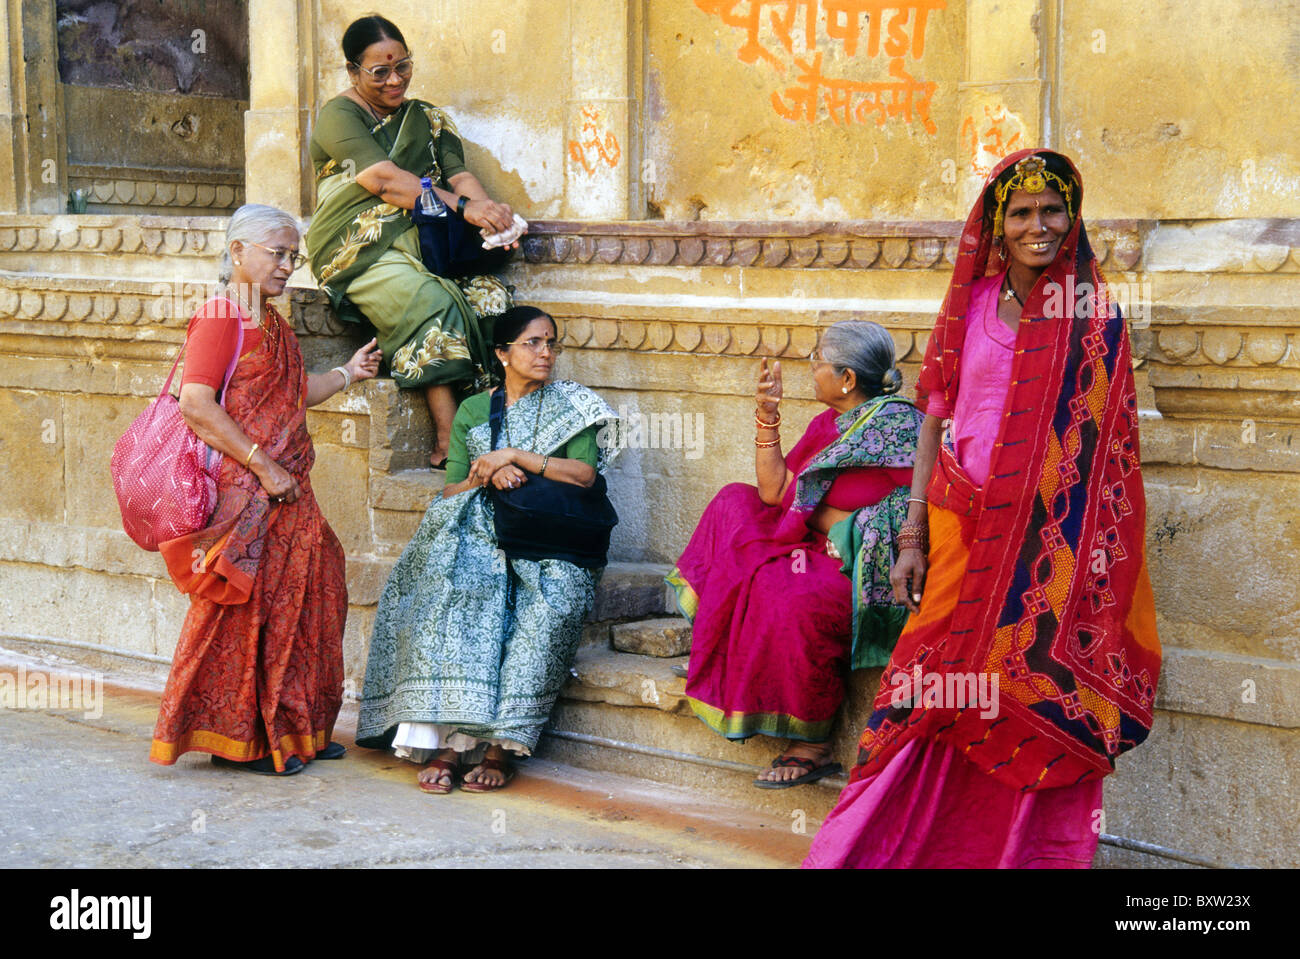 Les femmes en saris colorés, Jaisalmer, Rajasthan, India Banque D'Images